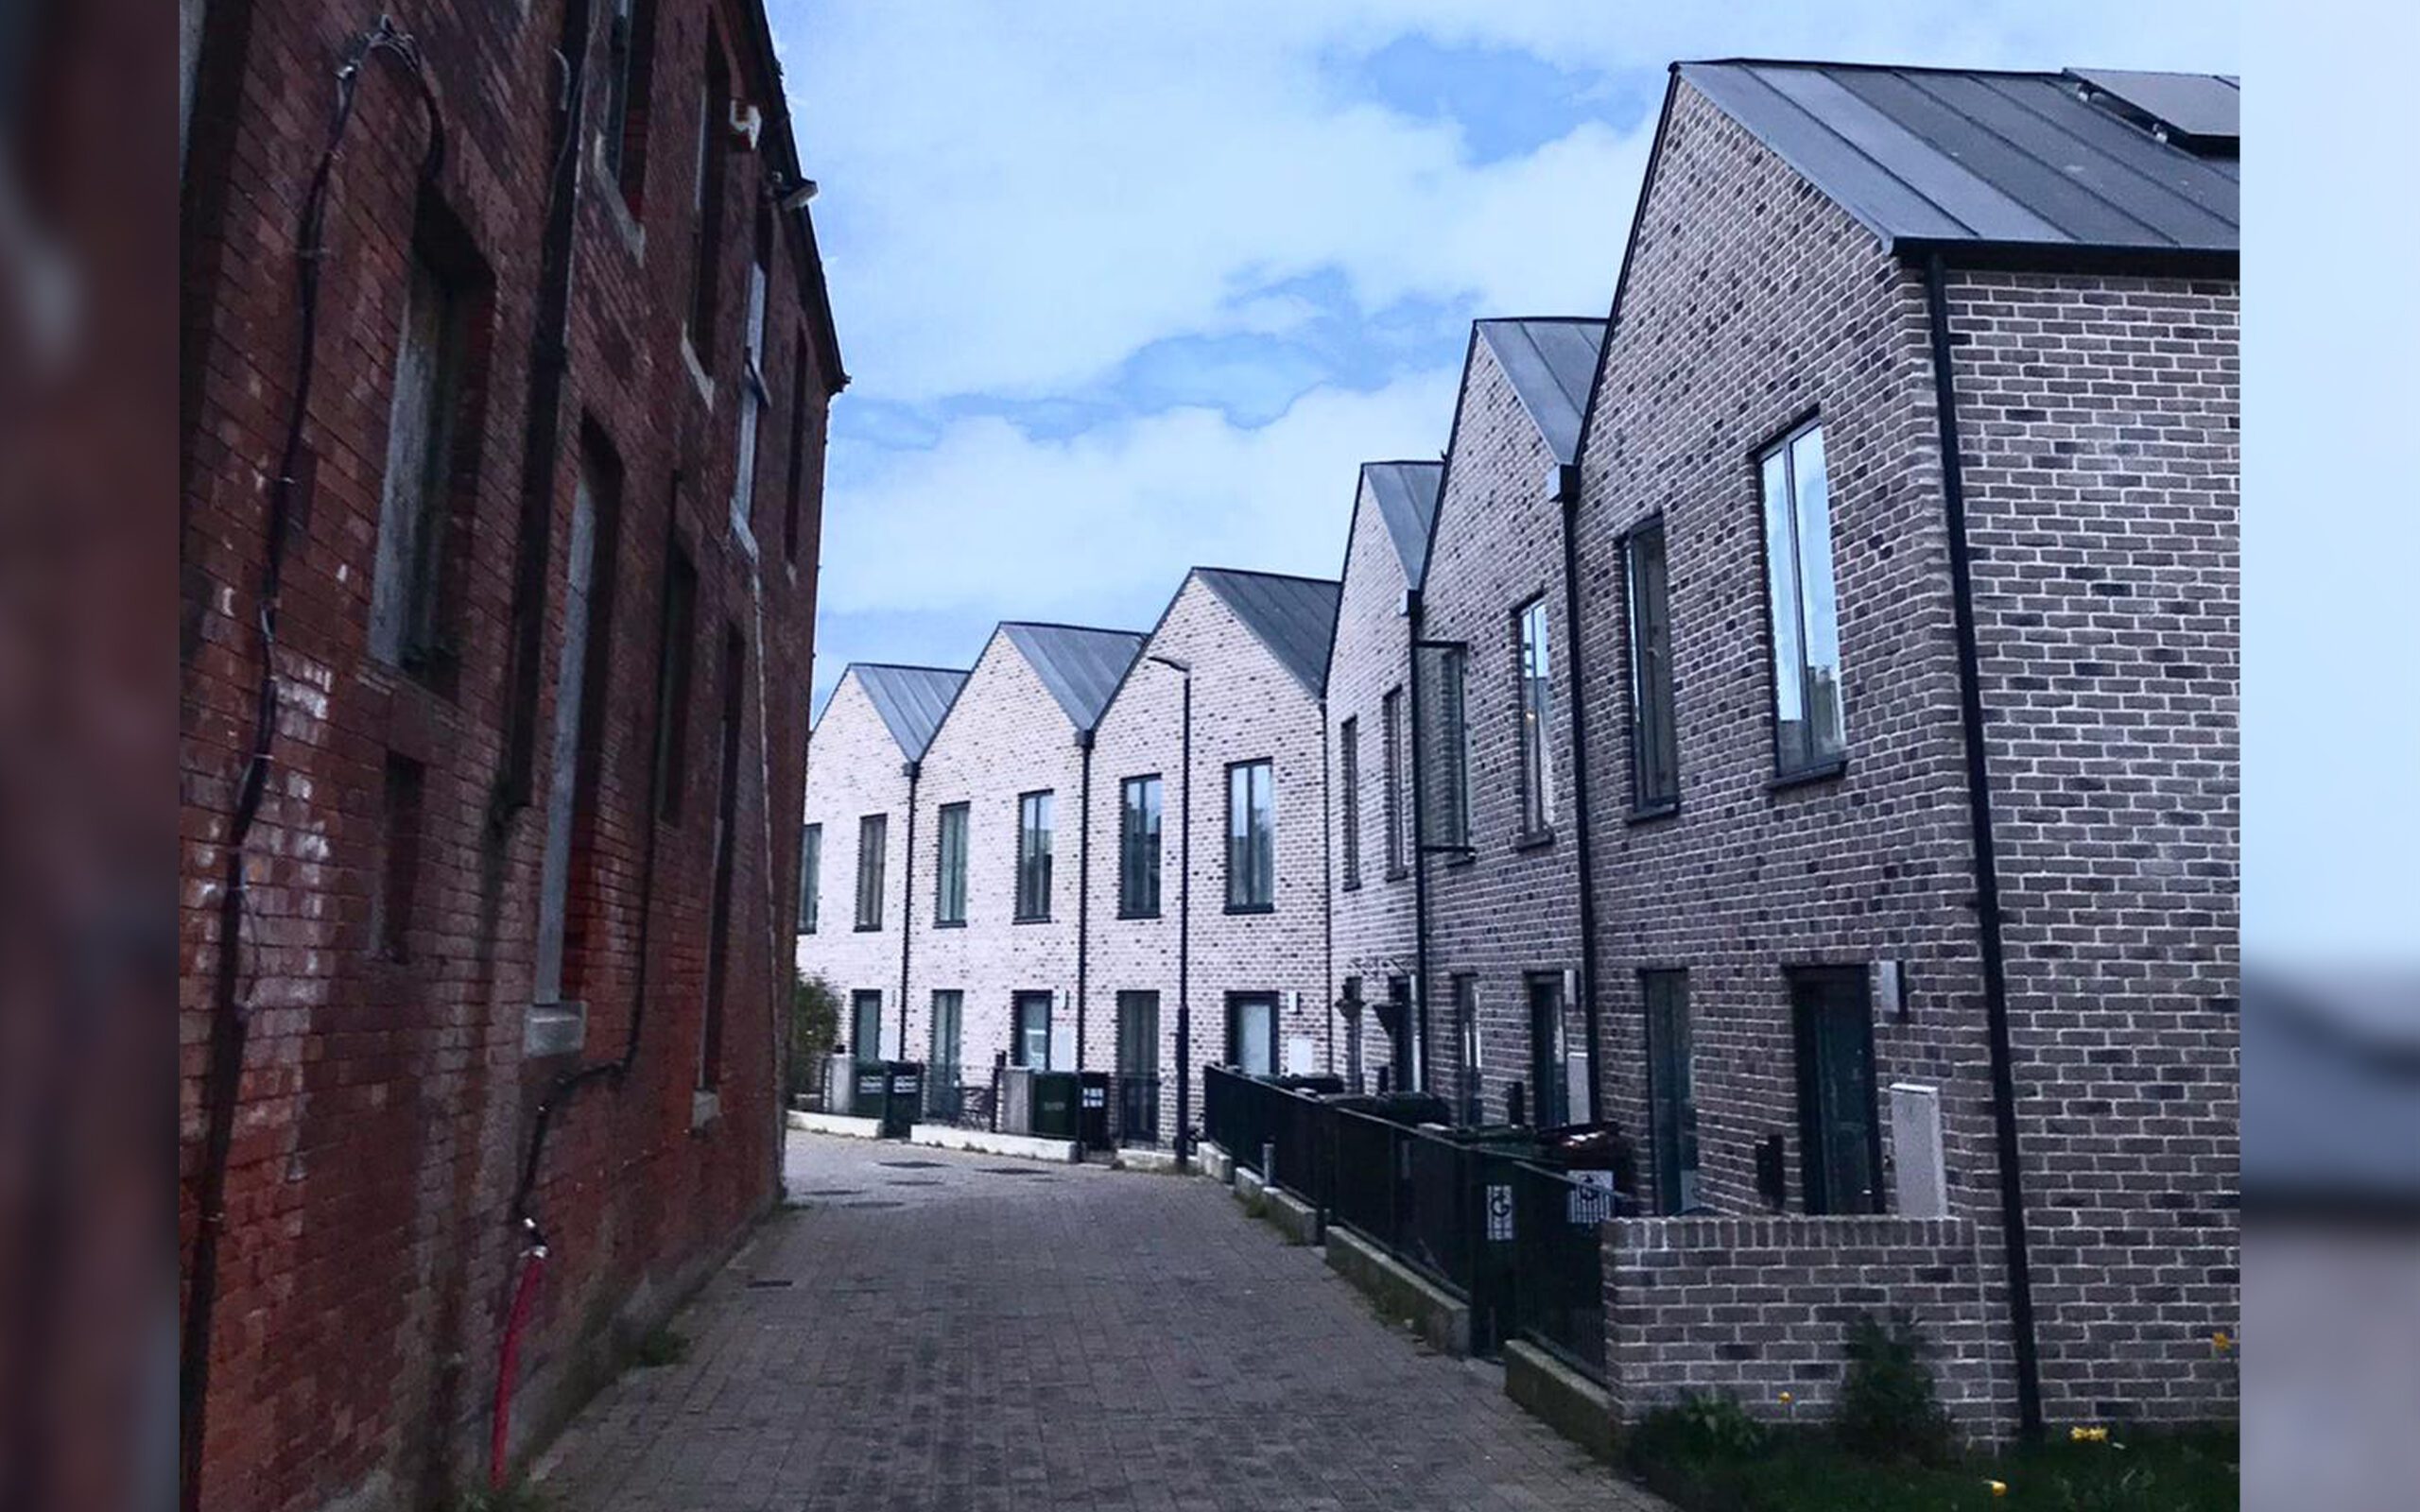 An enterprise centre beside an urban social terraced housing in Phibsborough.